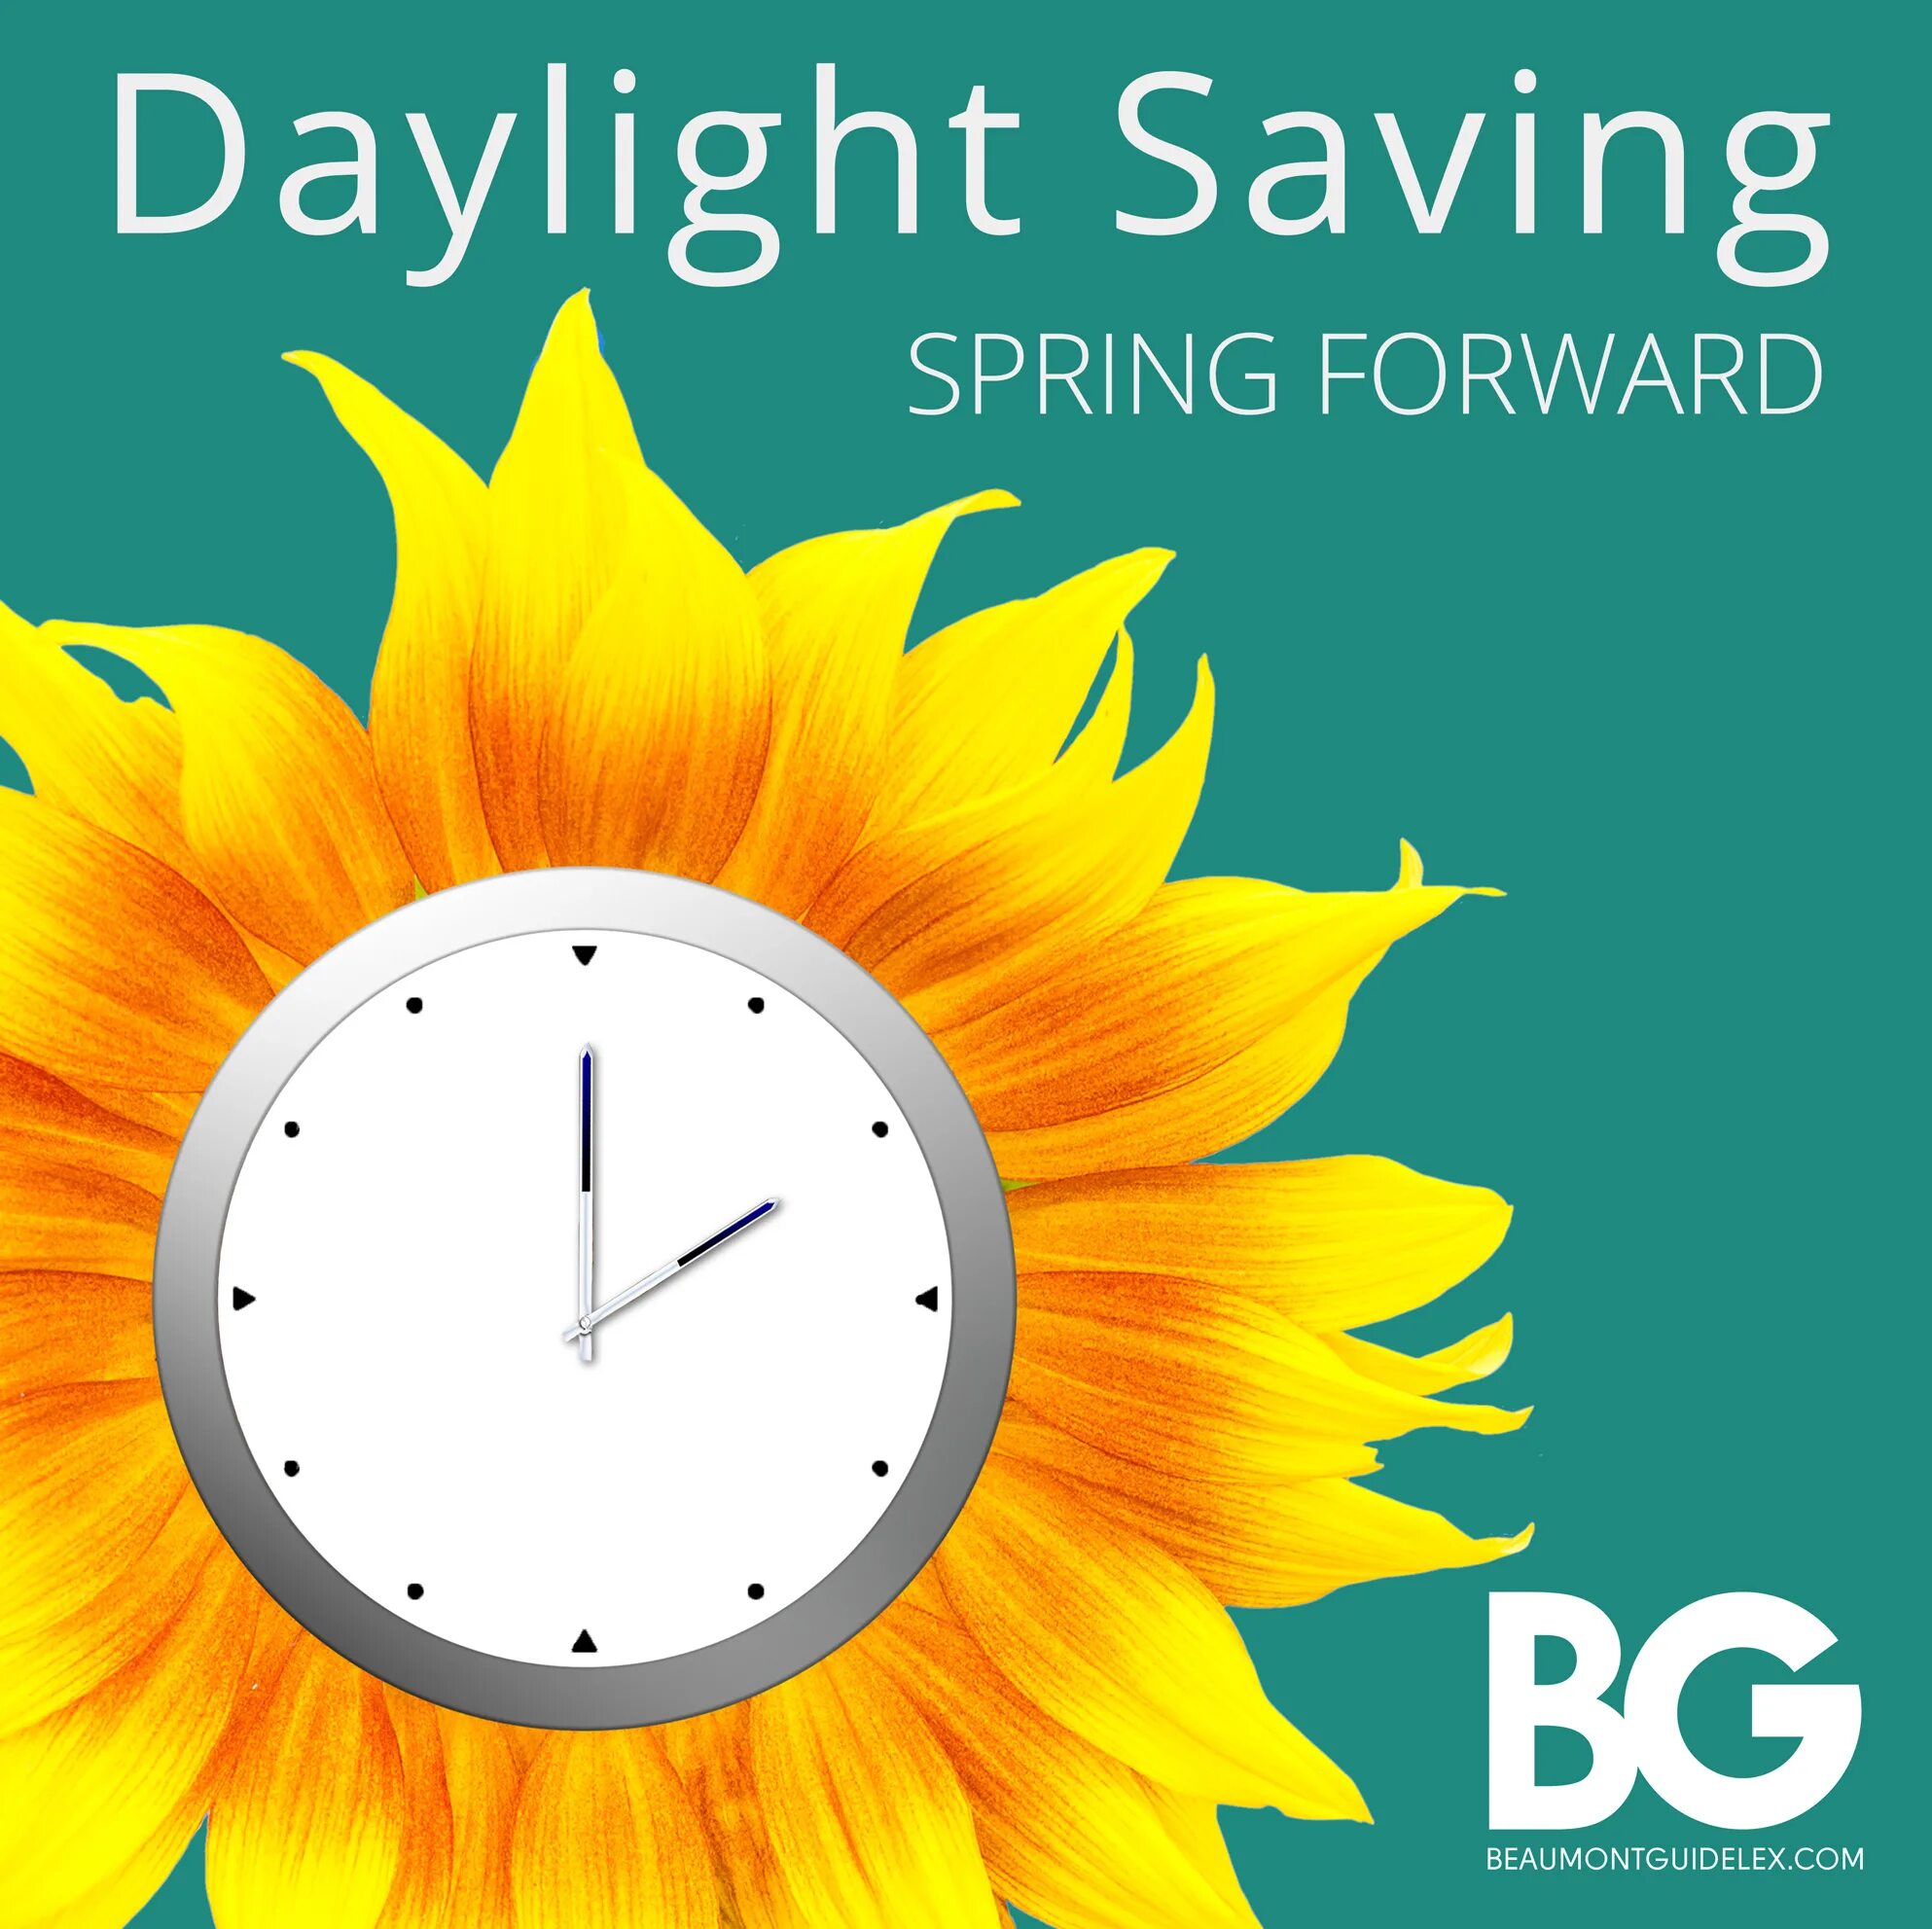 Daylight saving. Daylight saving time. Spring Daylight savings. Daylight saving Tome. 2 апреля 2020 день